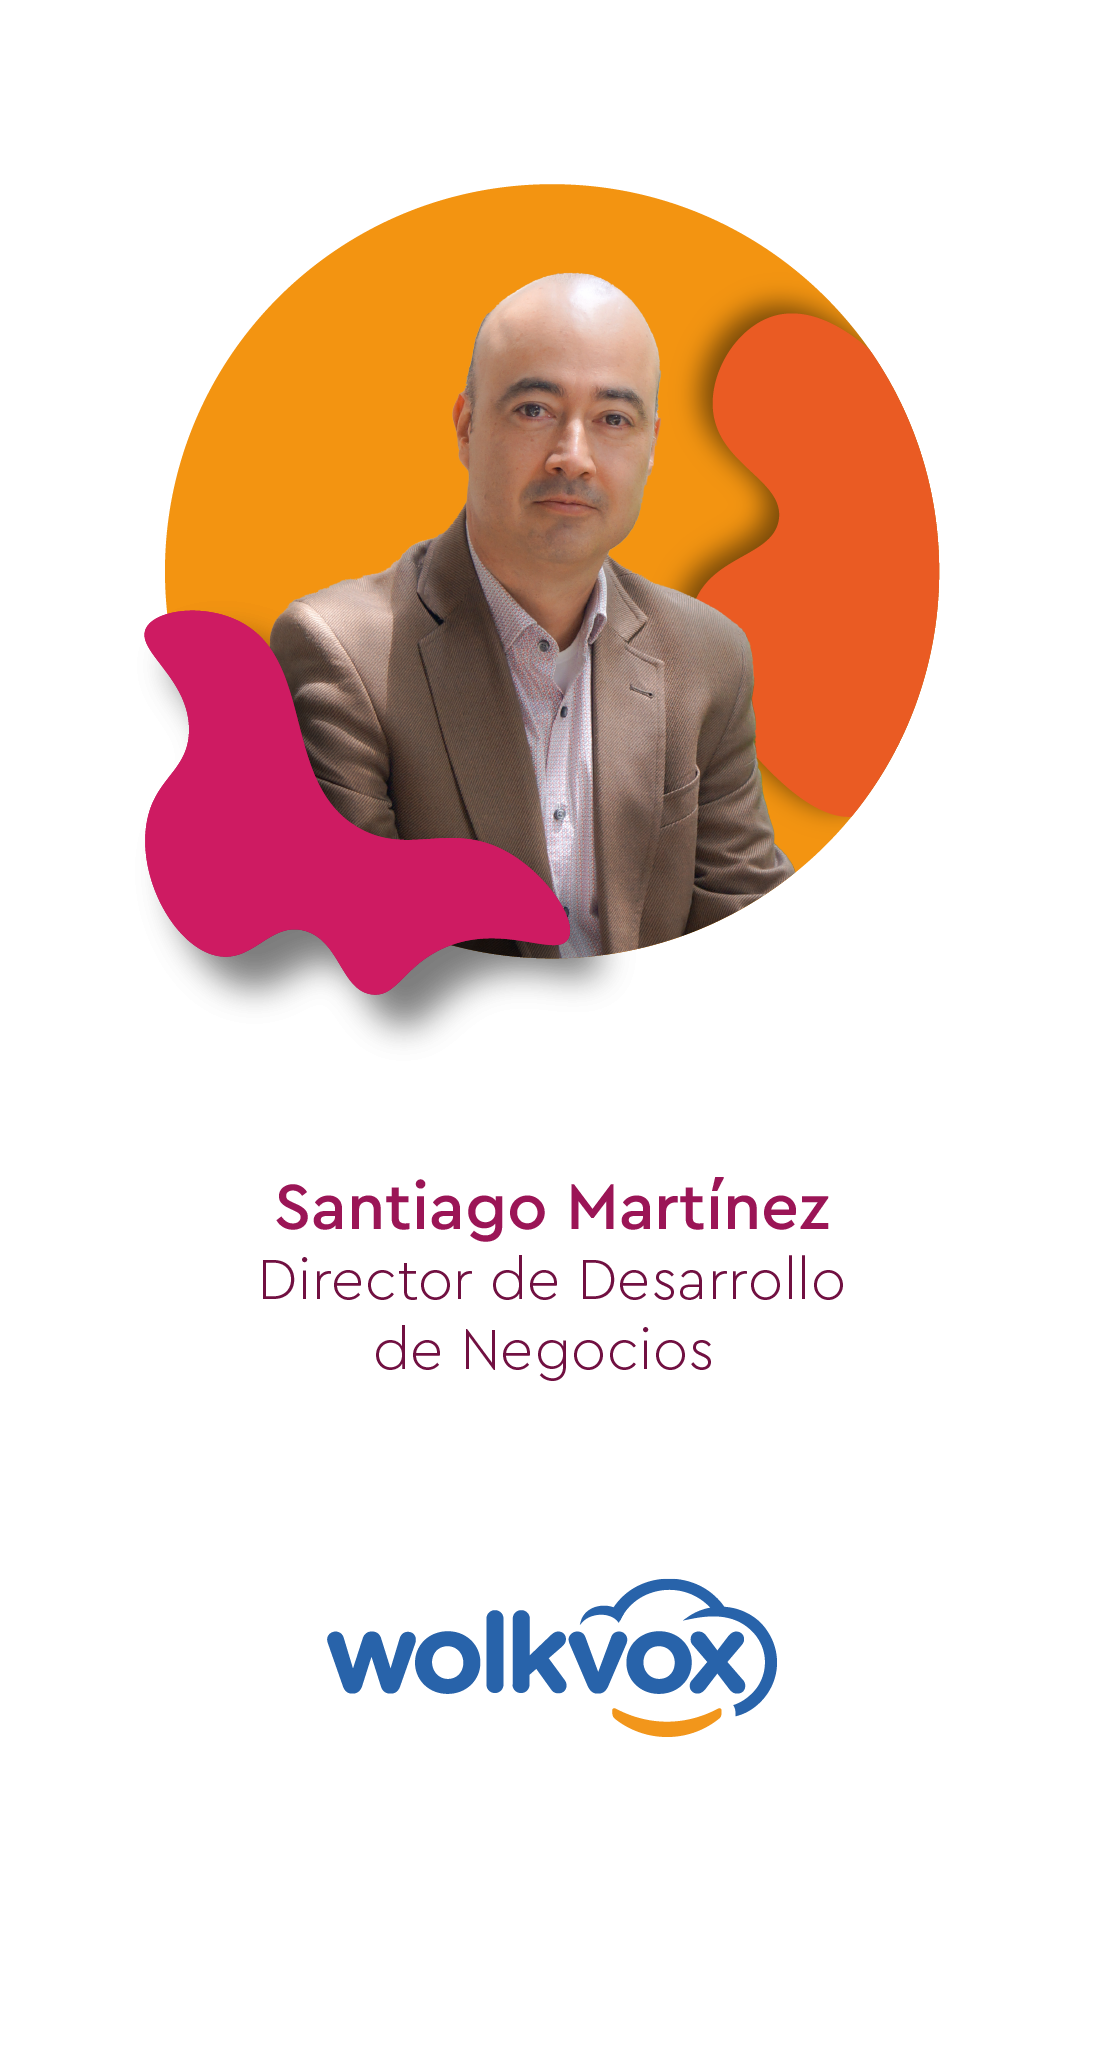 Santiago Martínez